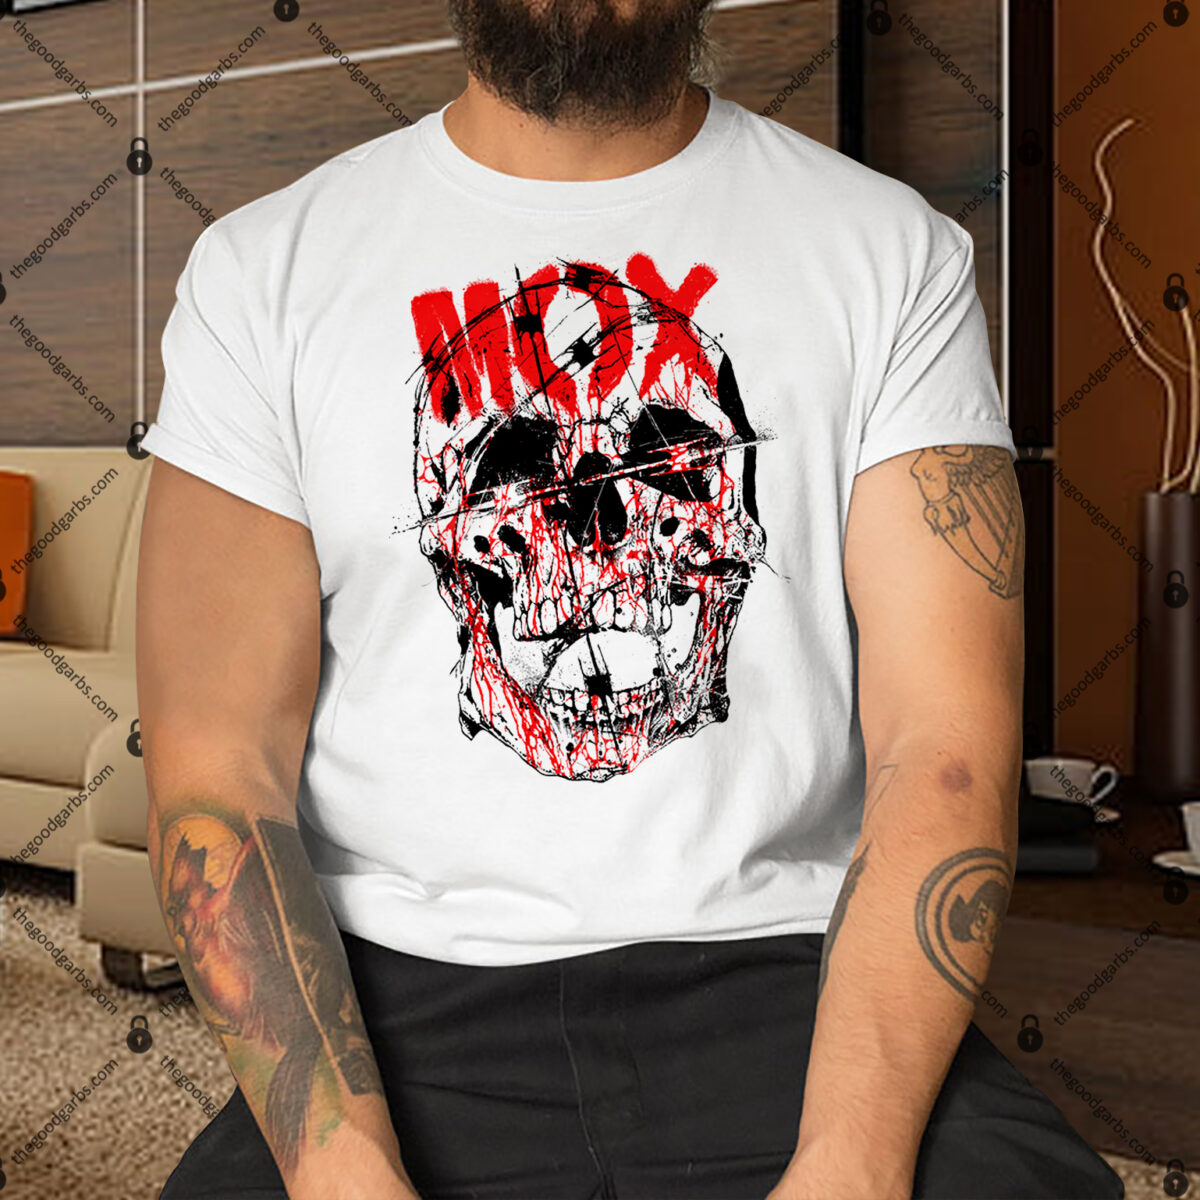 Jon Moxley No Mercy Shirt